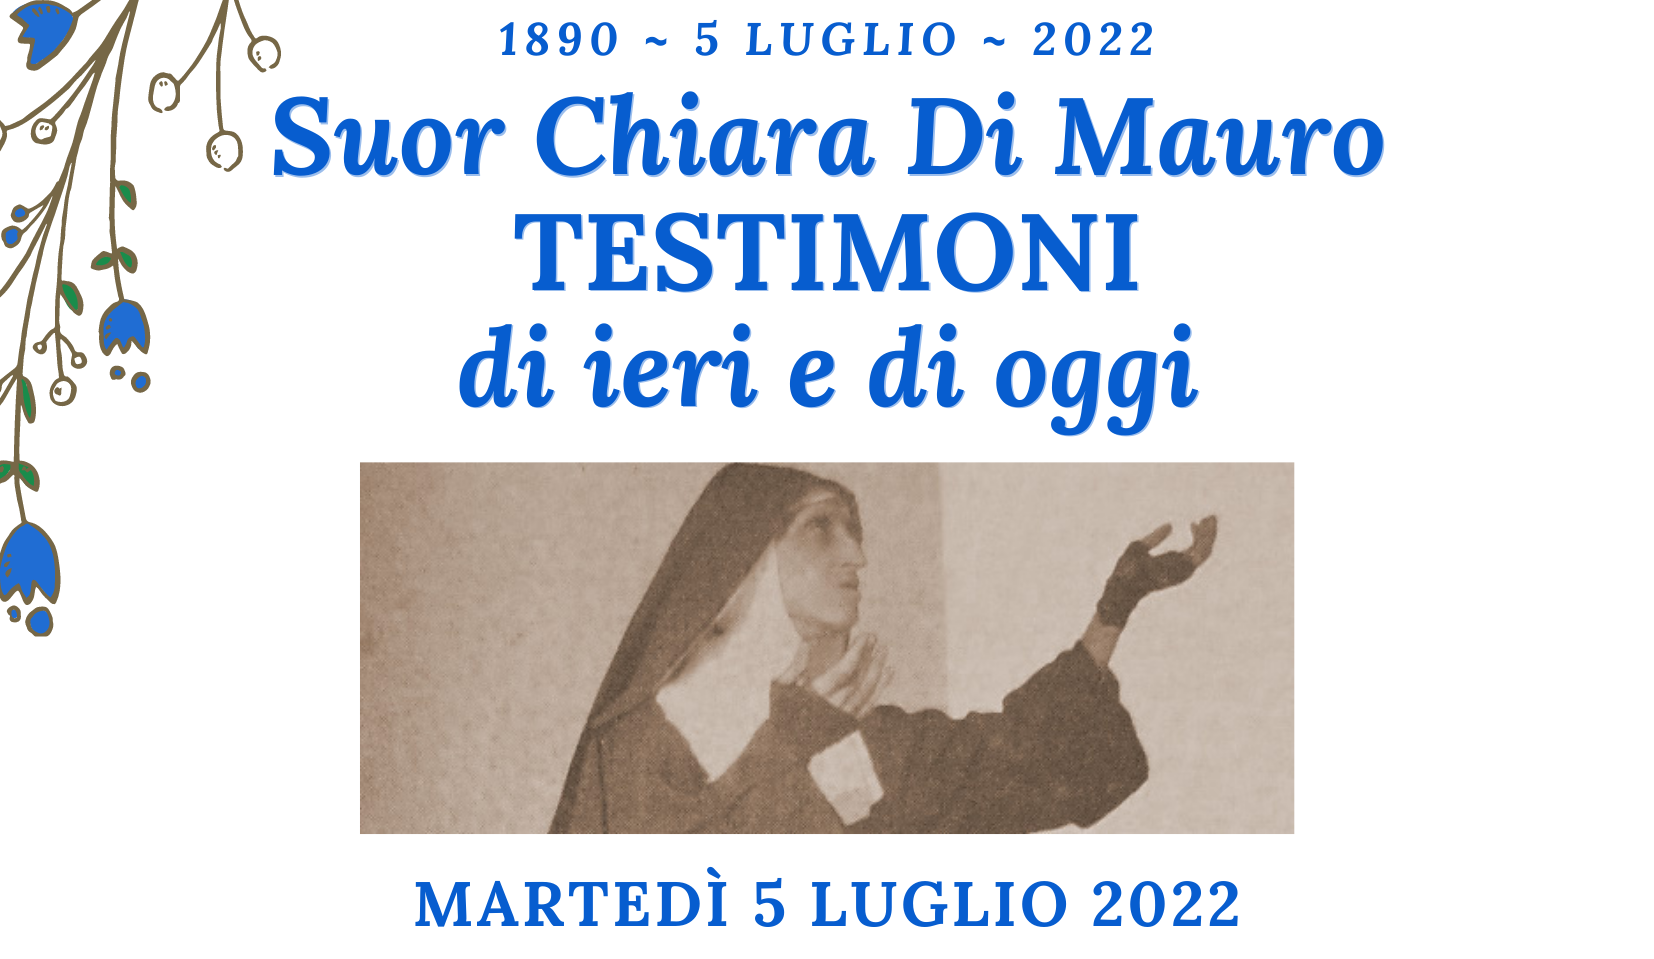 Siracusa – “Suor Chiara Di Mauro: testimoni di ieri e di oggi”